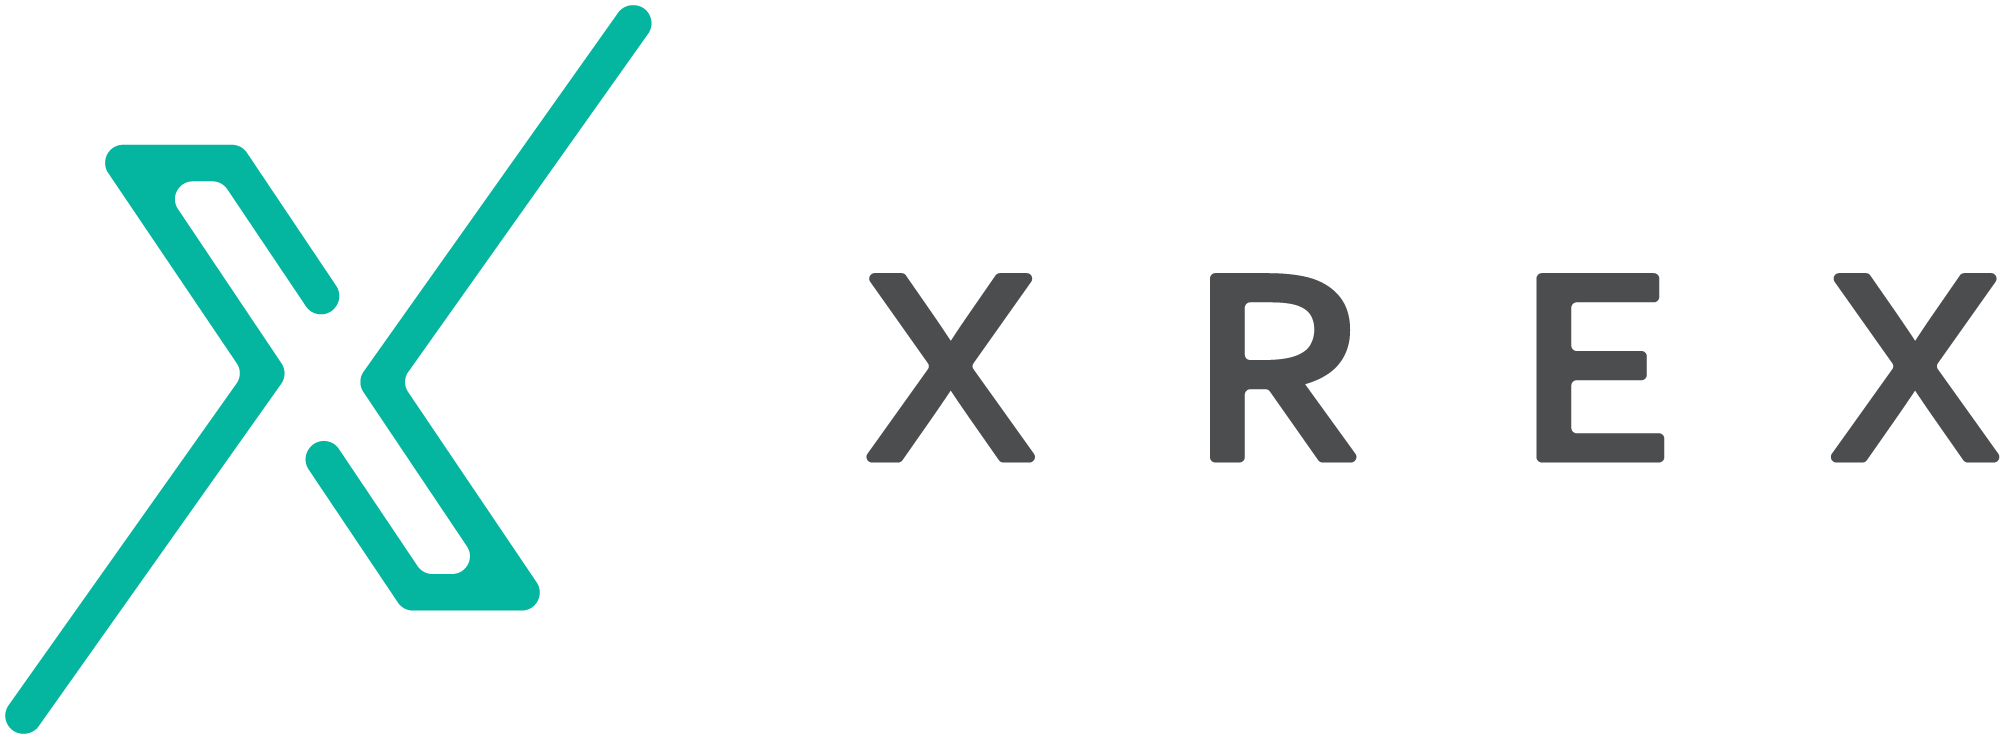 XREX Logo Horizontal HD1